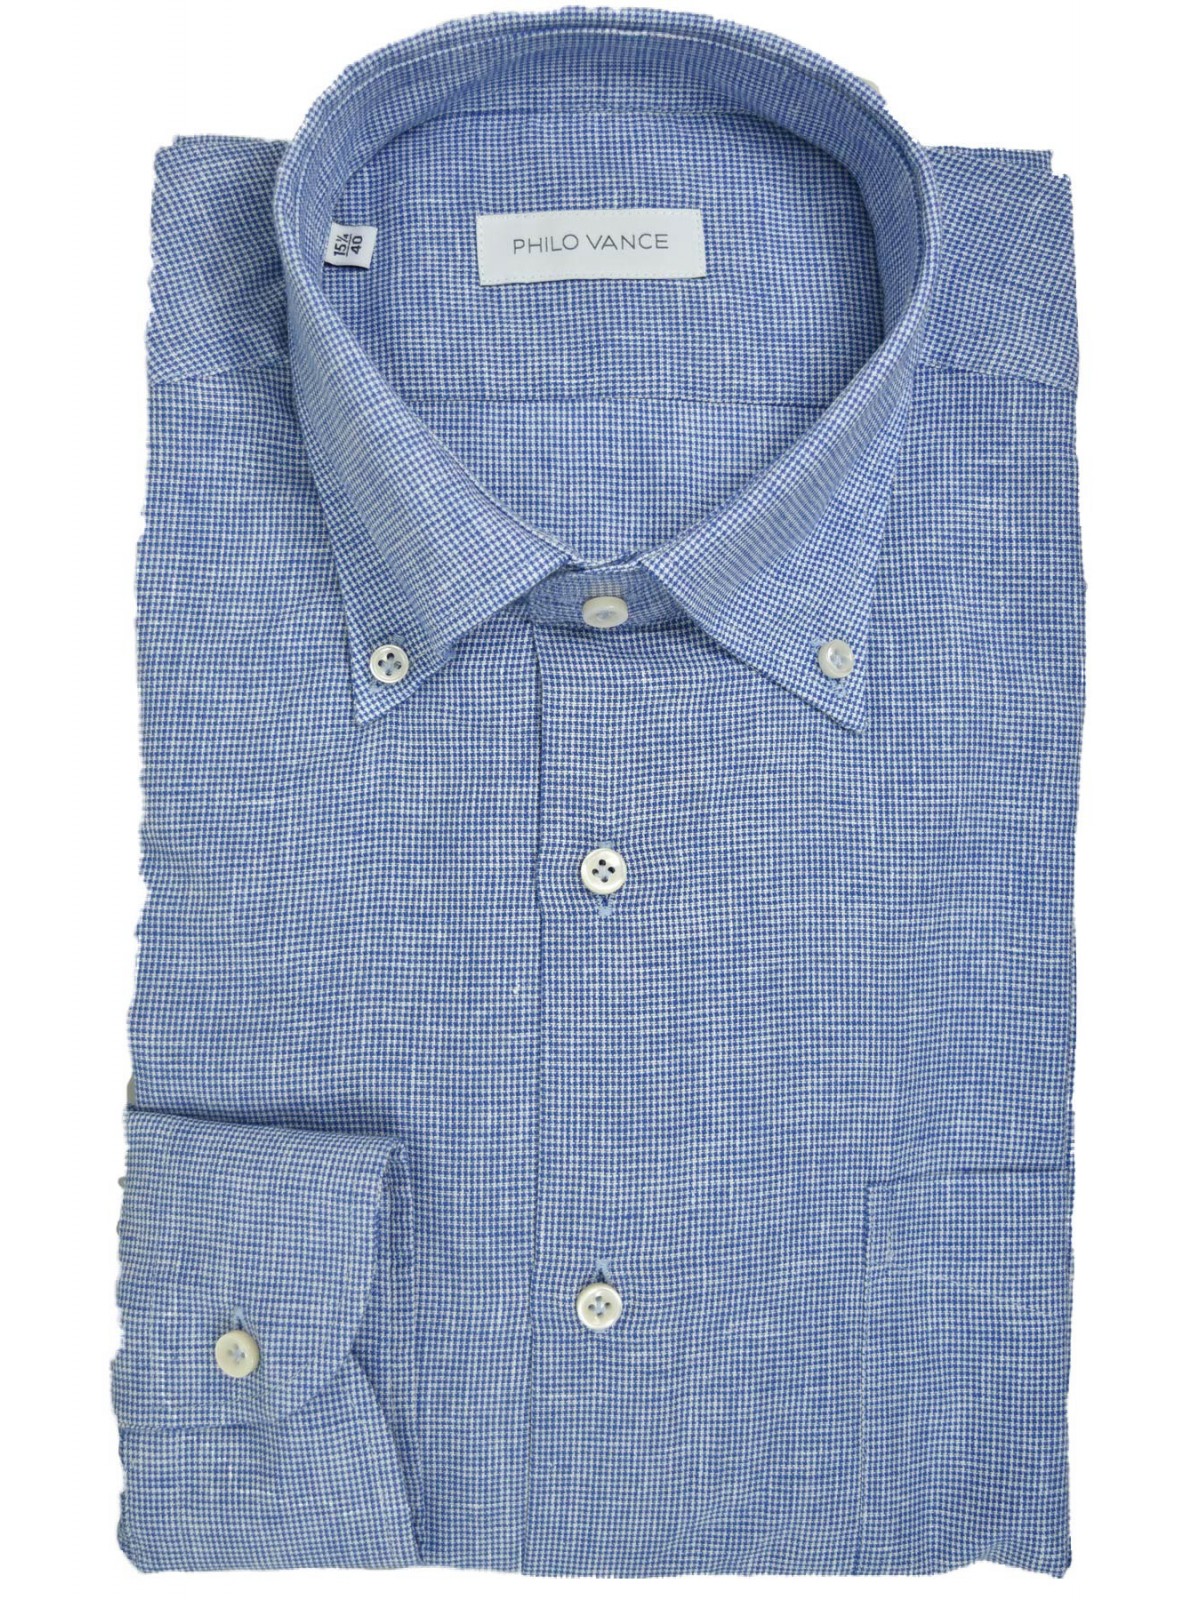 Light Blue Checked Linen Blend Man Shirt Button Down Collar - Philo Vance - Acapulco